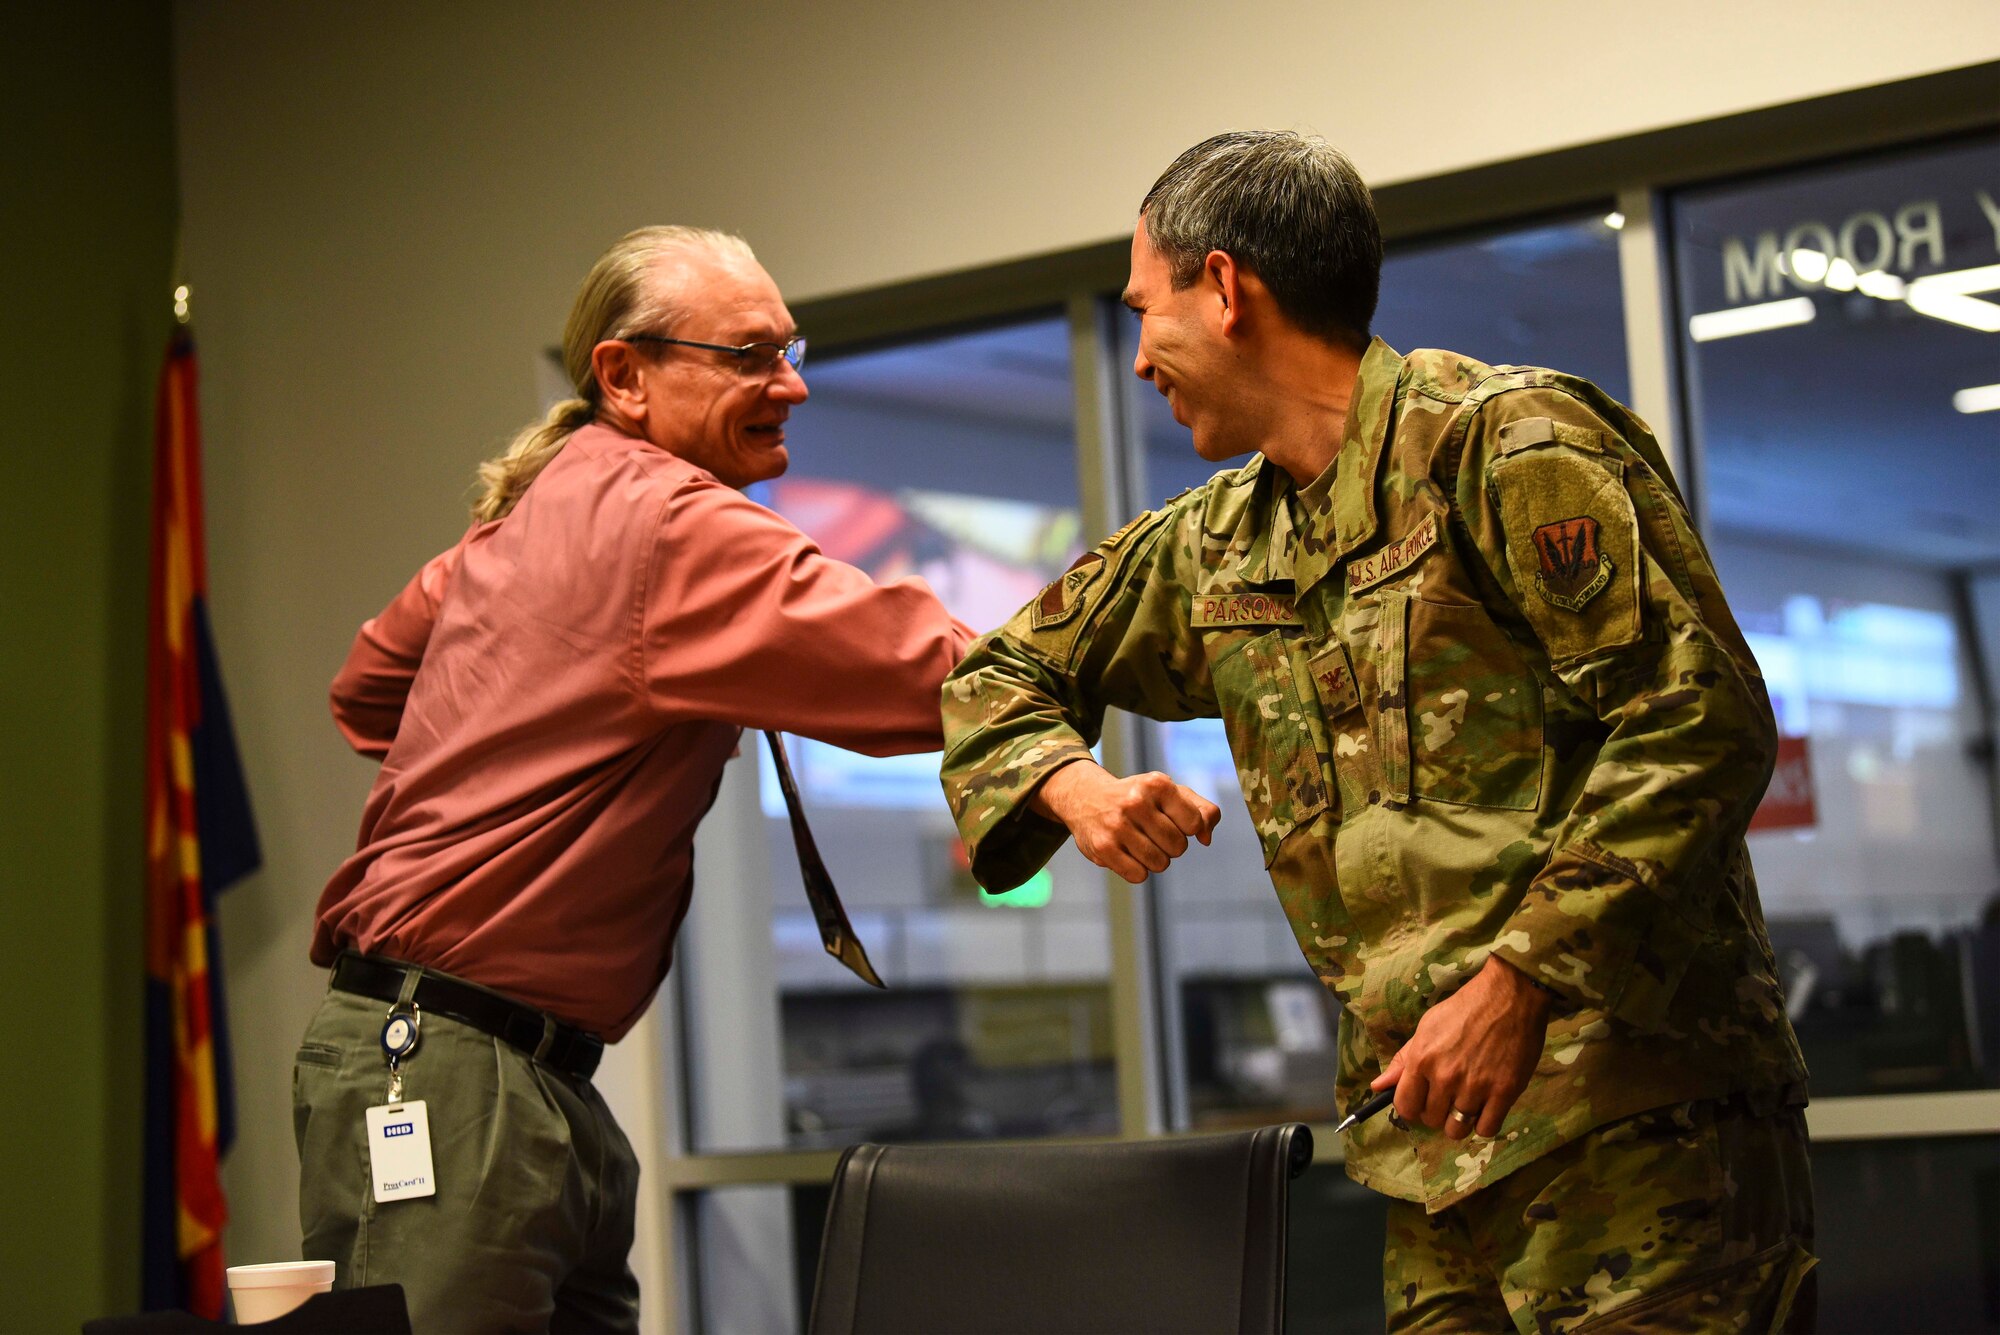 A photo of an airman and a civilian sharing an elbow "high-five"